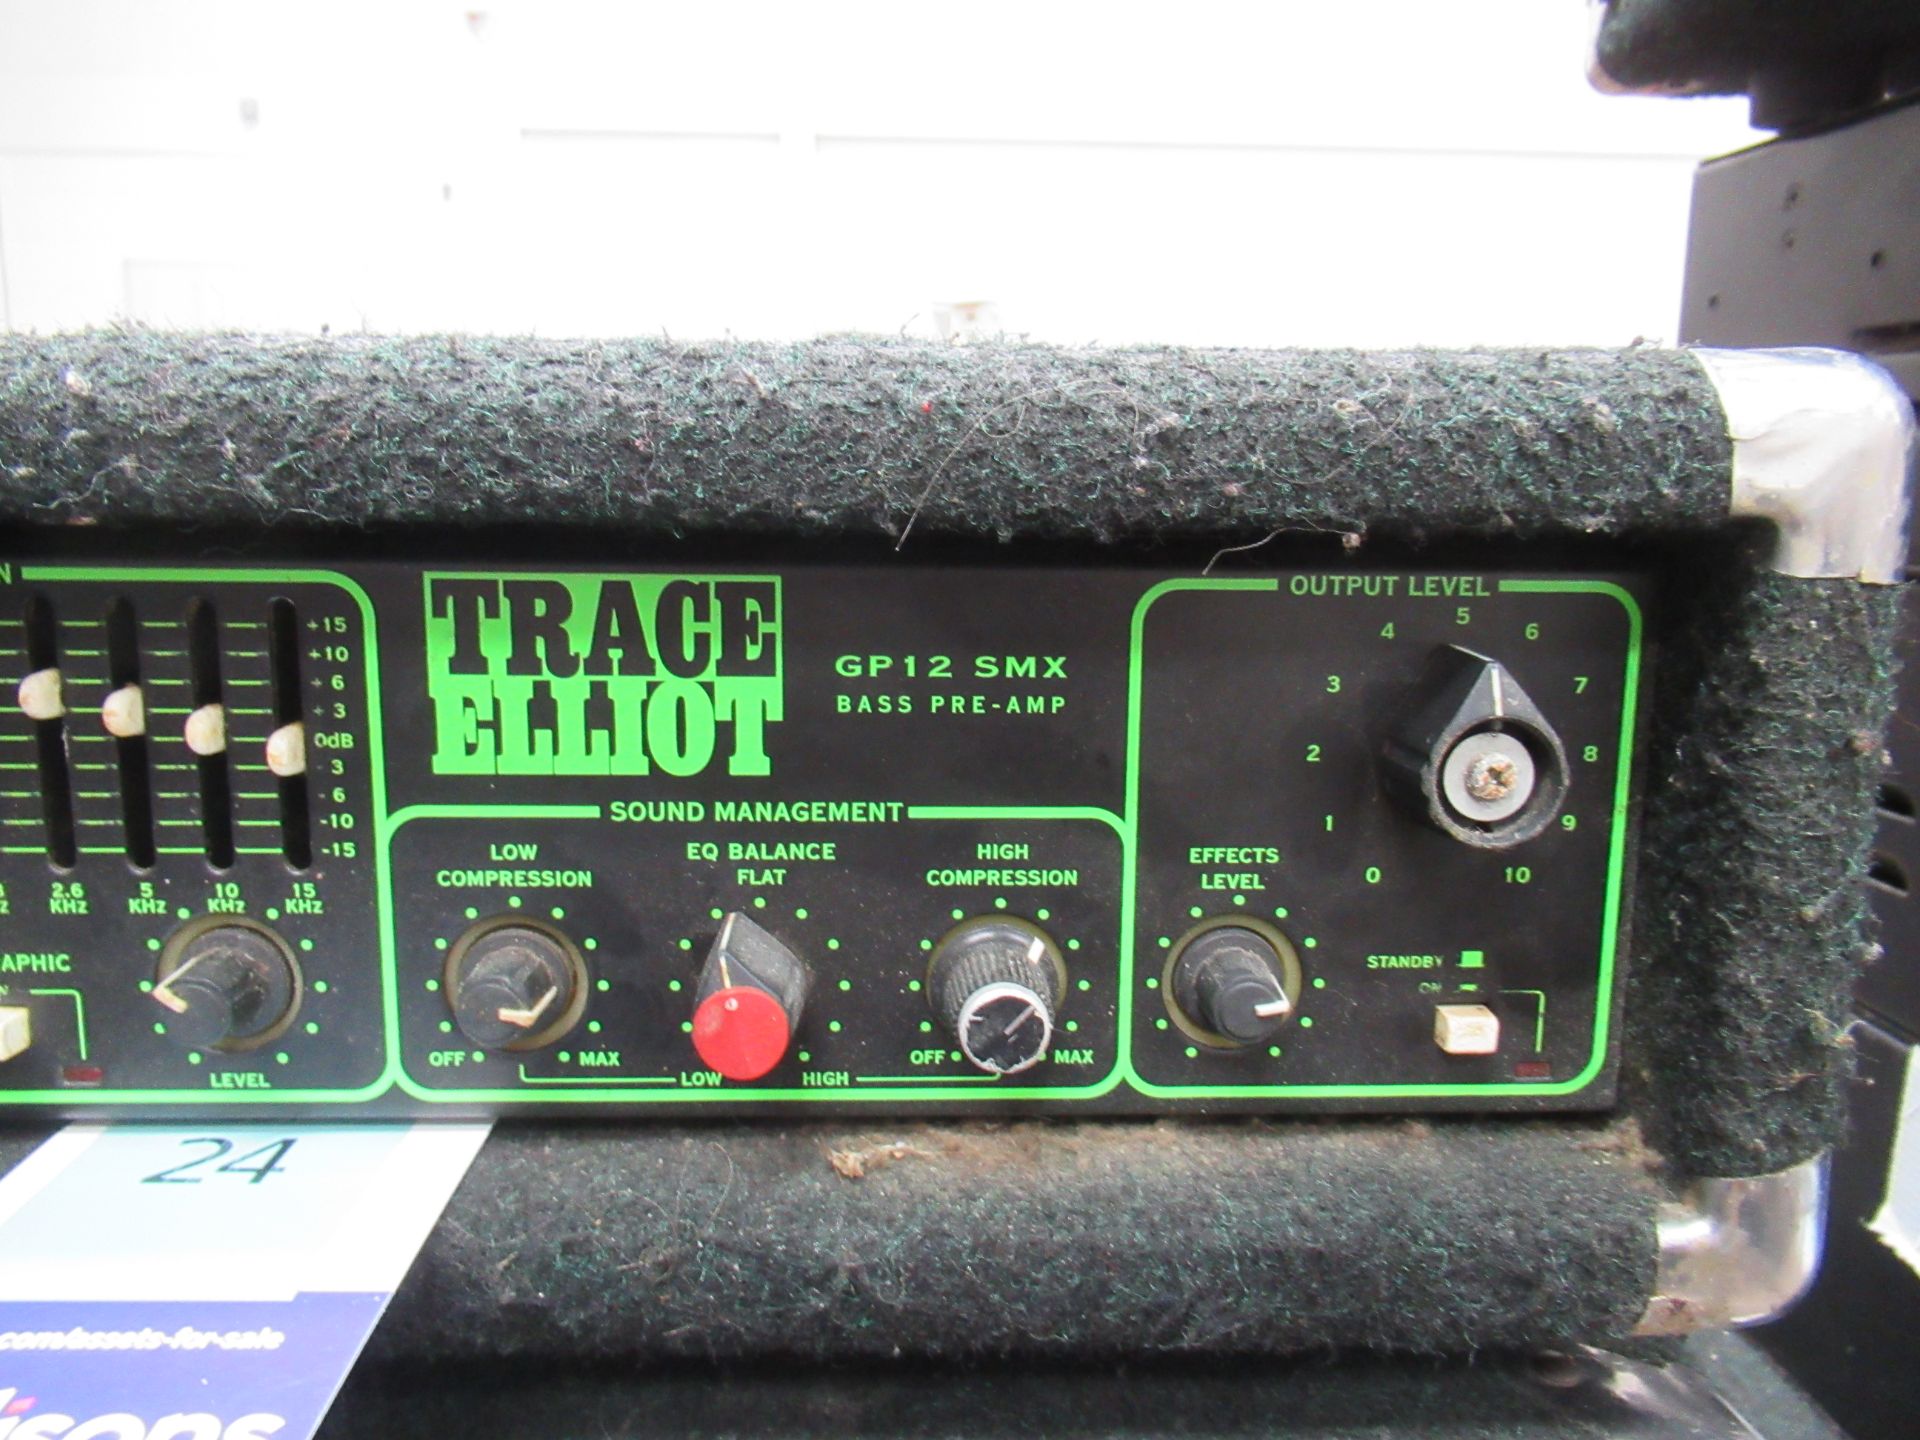 Trace Elliot GP12 SMX Pre-Amp - Image 3 of 4